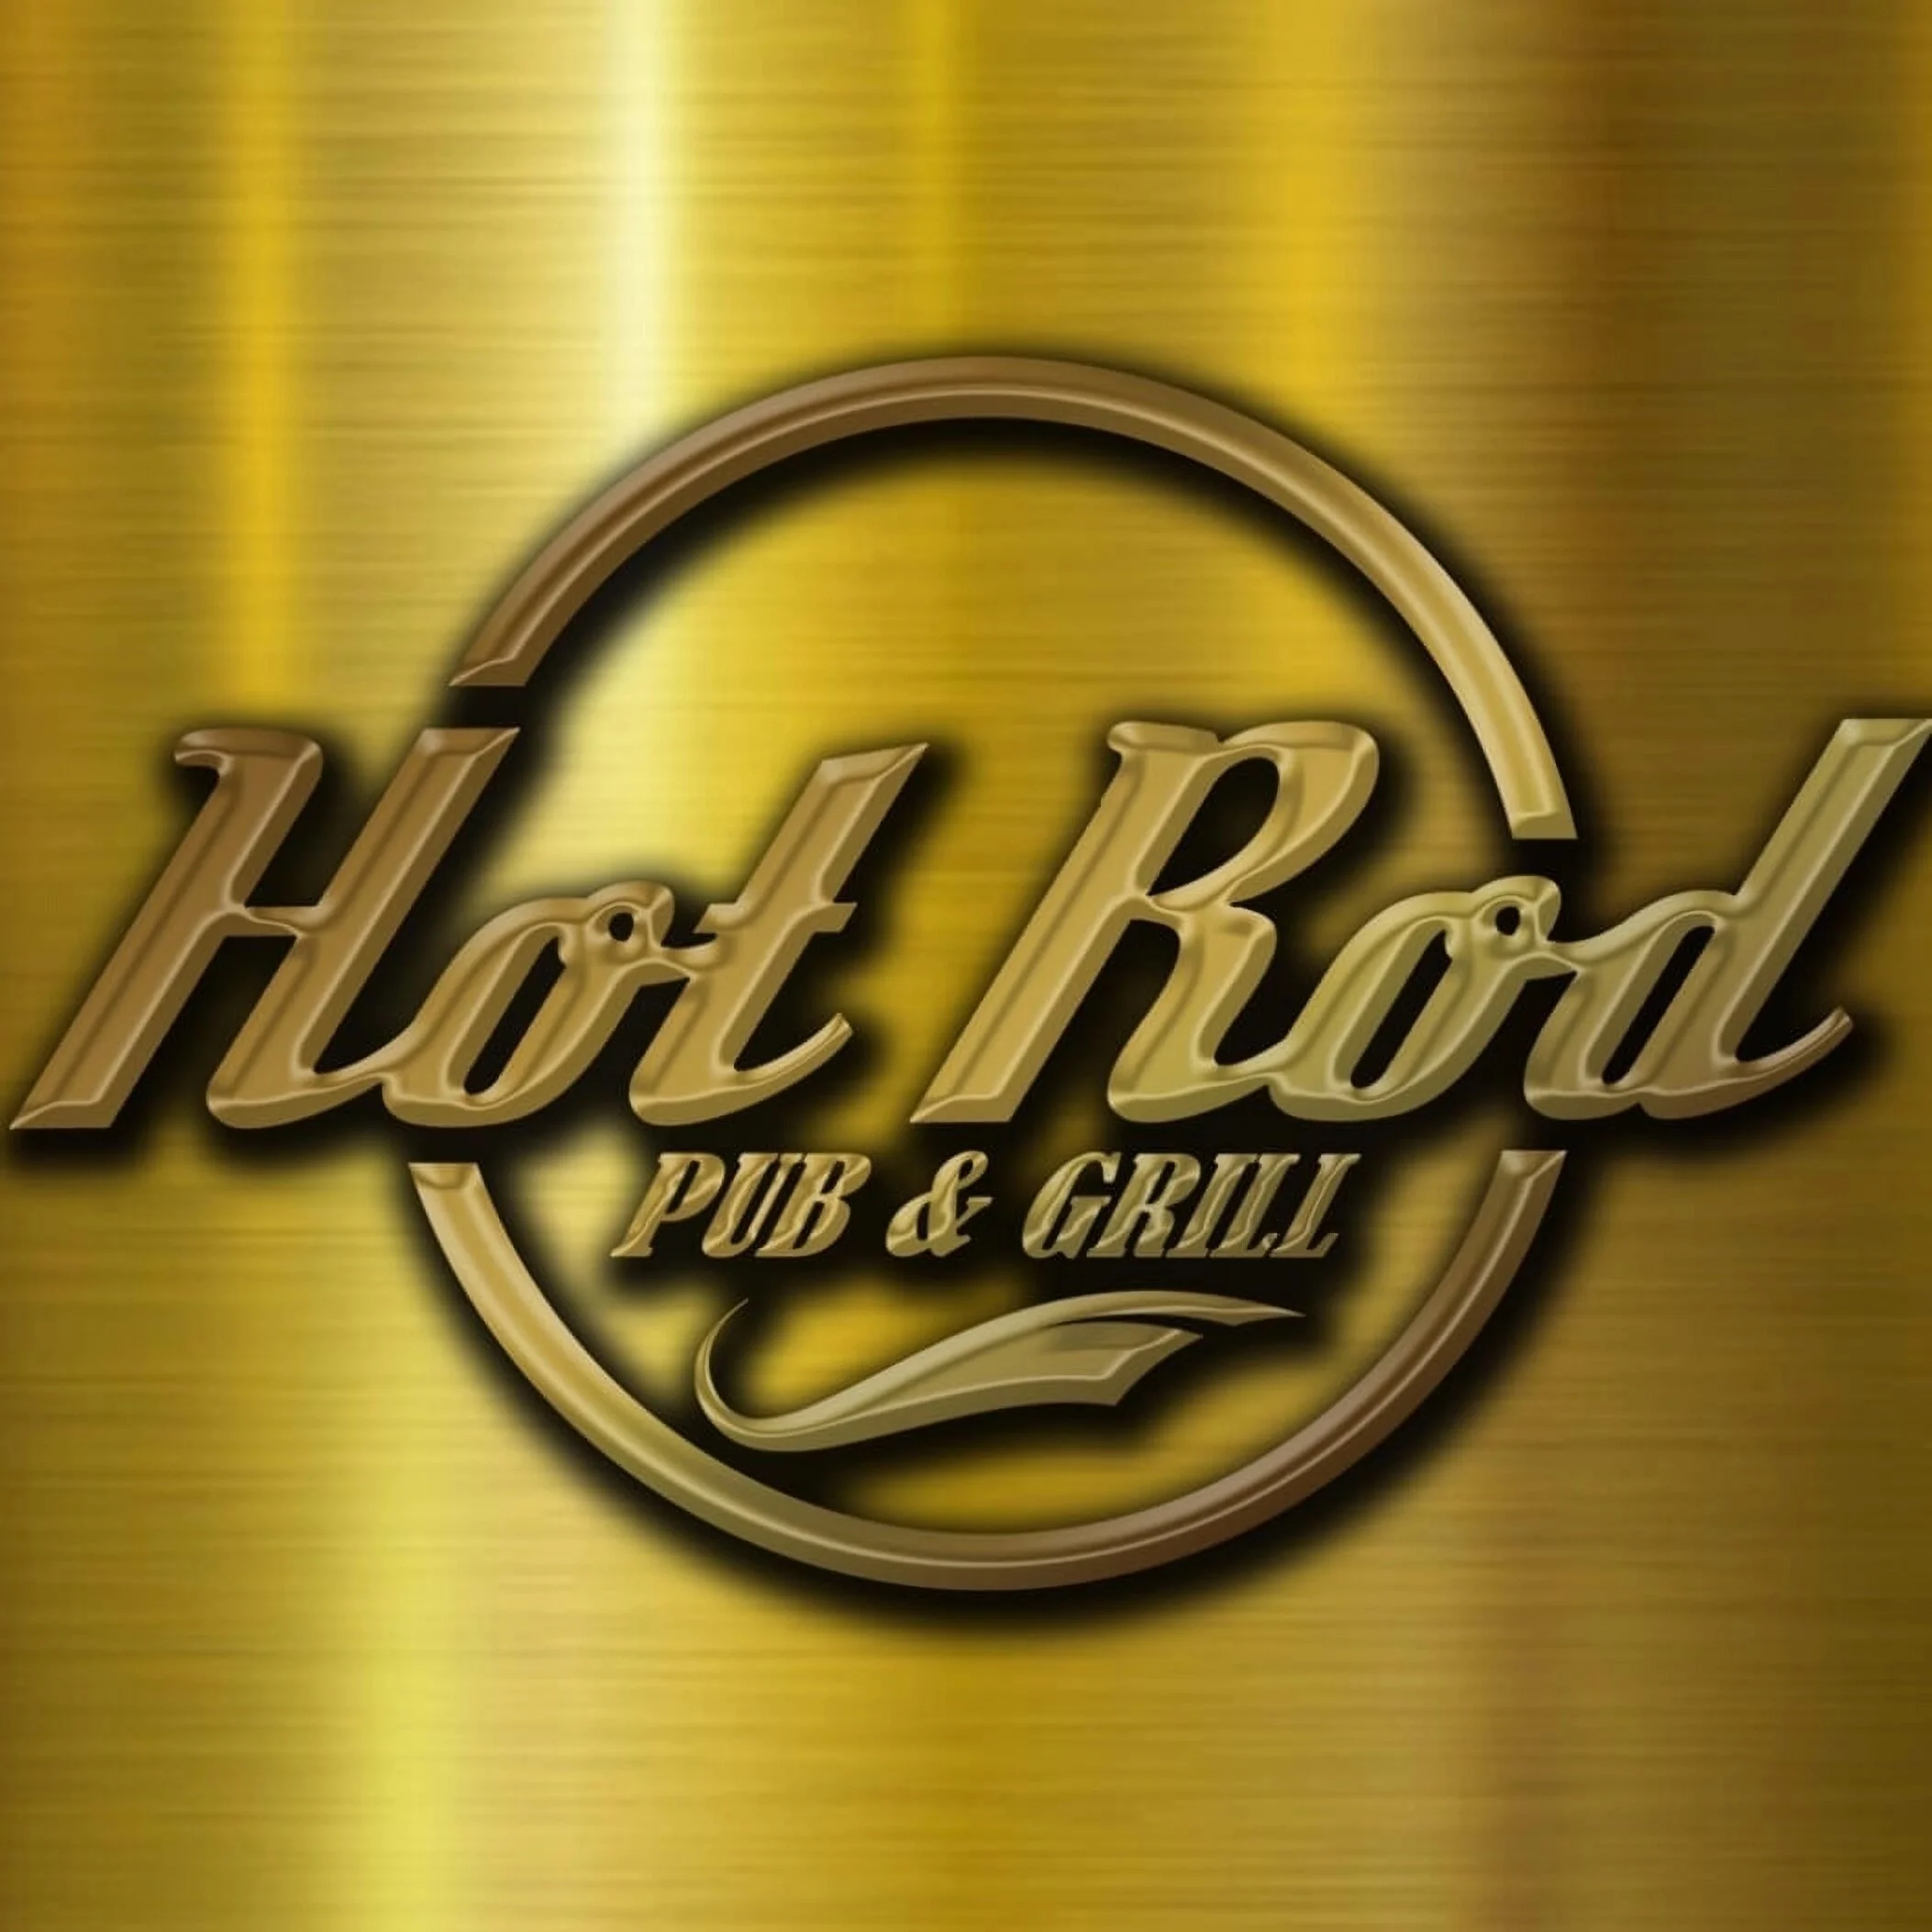 Hot Rod Ambato-4484